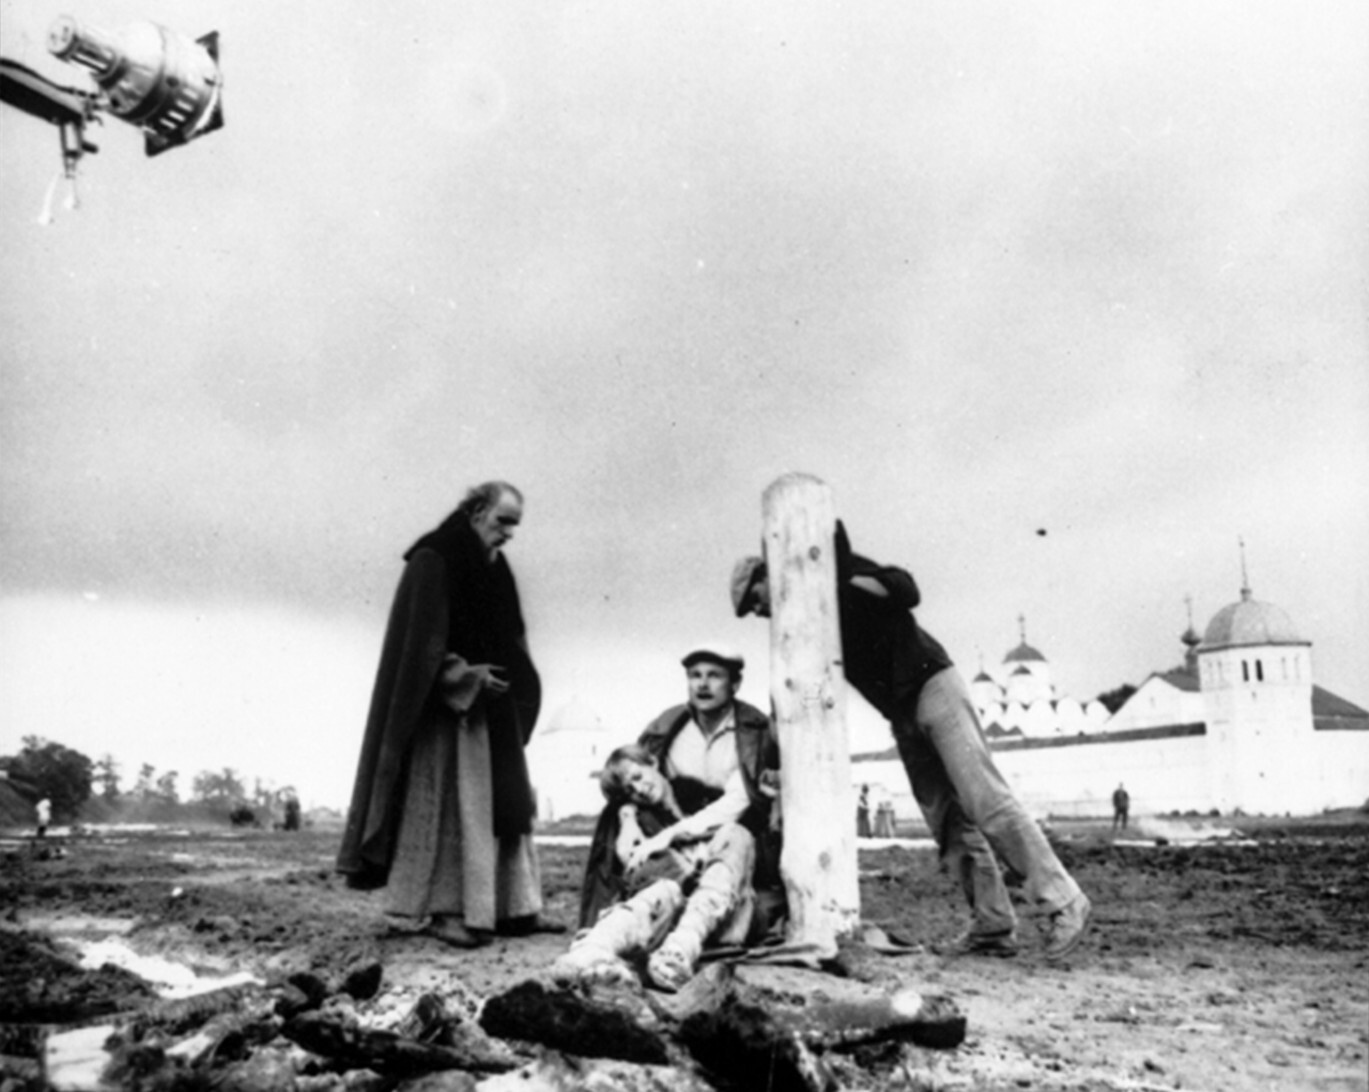 Андрей Тарковский, Николай Бурляев и Анатолий Солоницын на съёмках фильма Андрей Рублёв, 1966